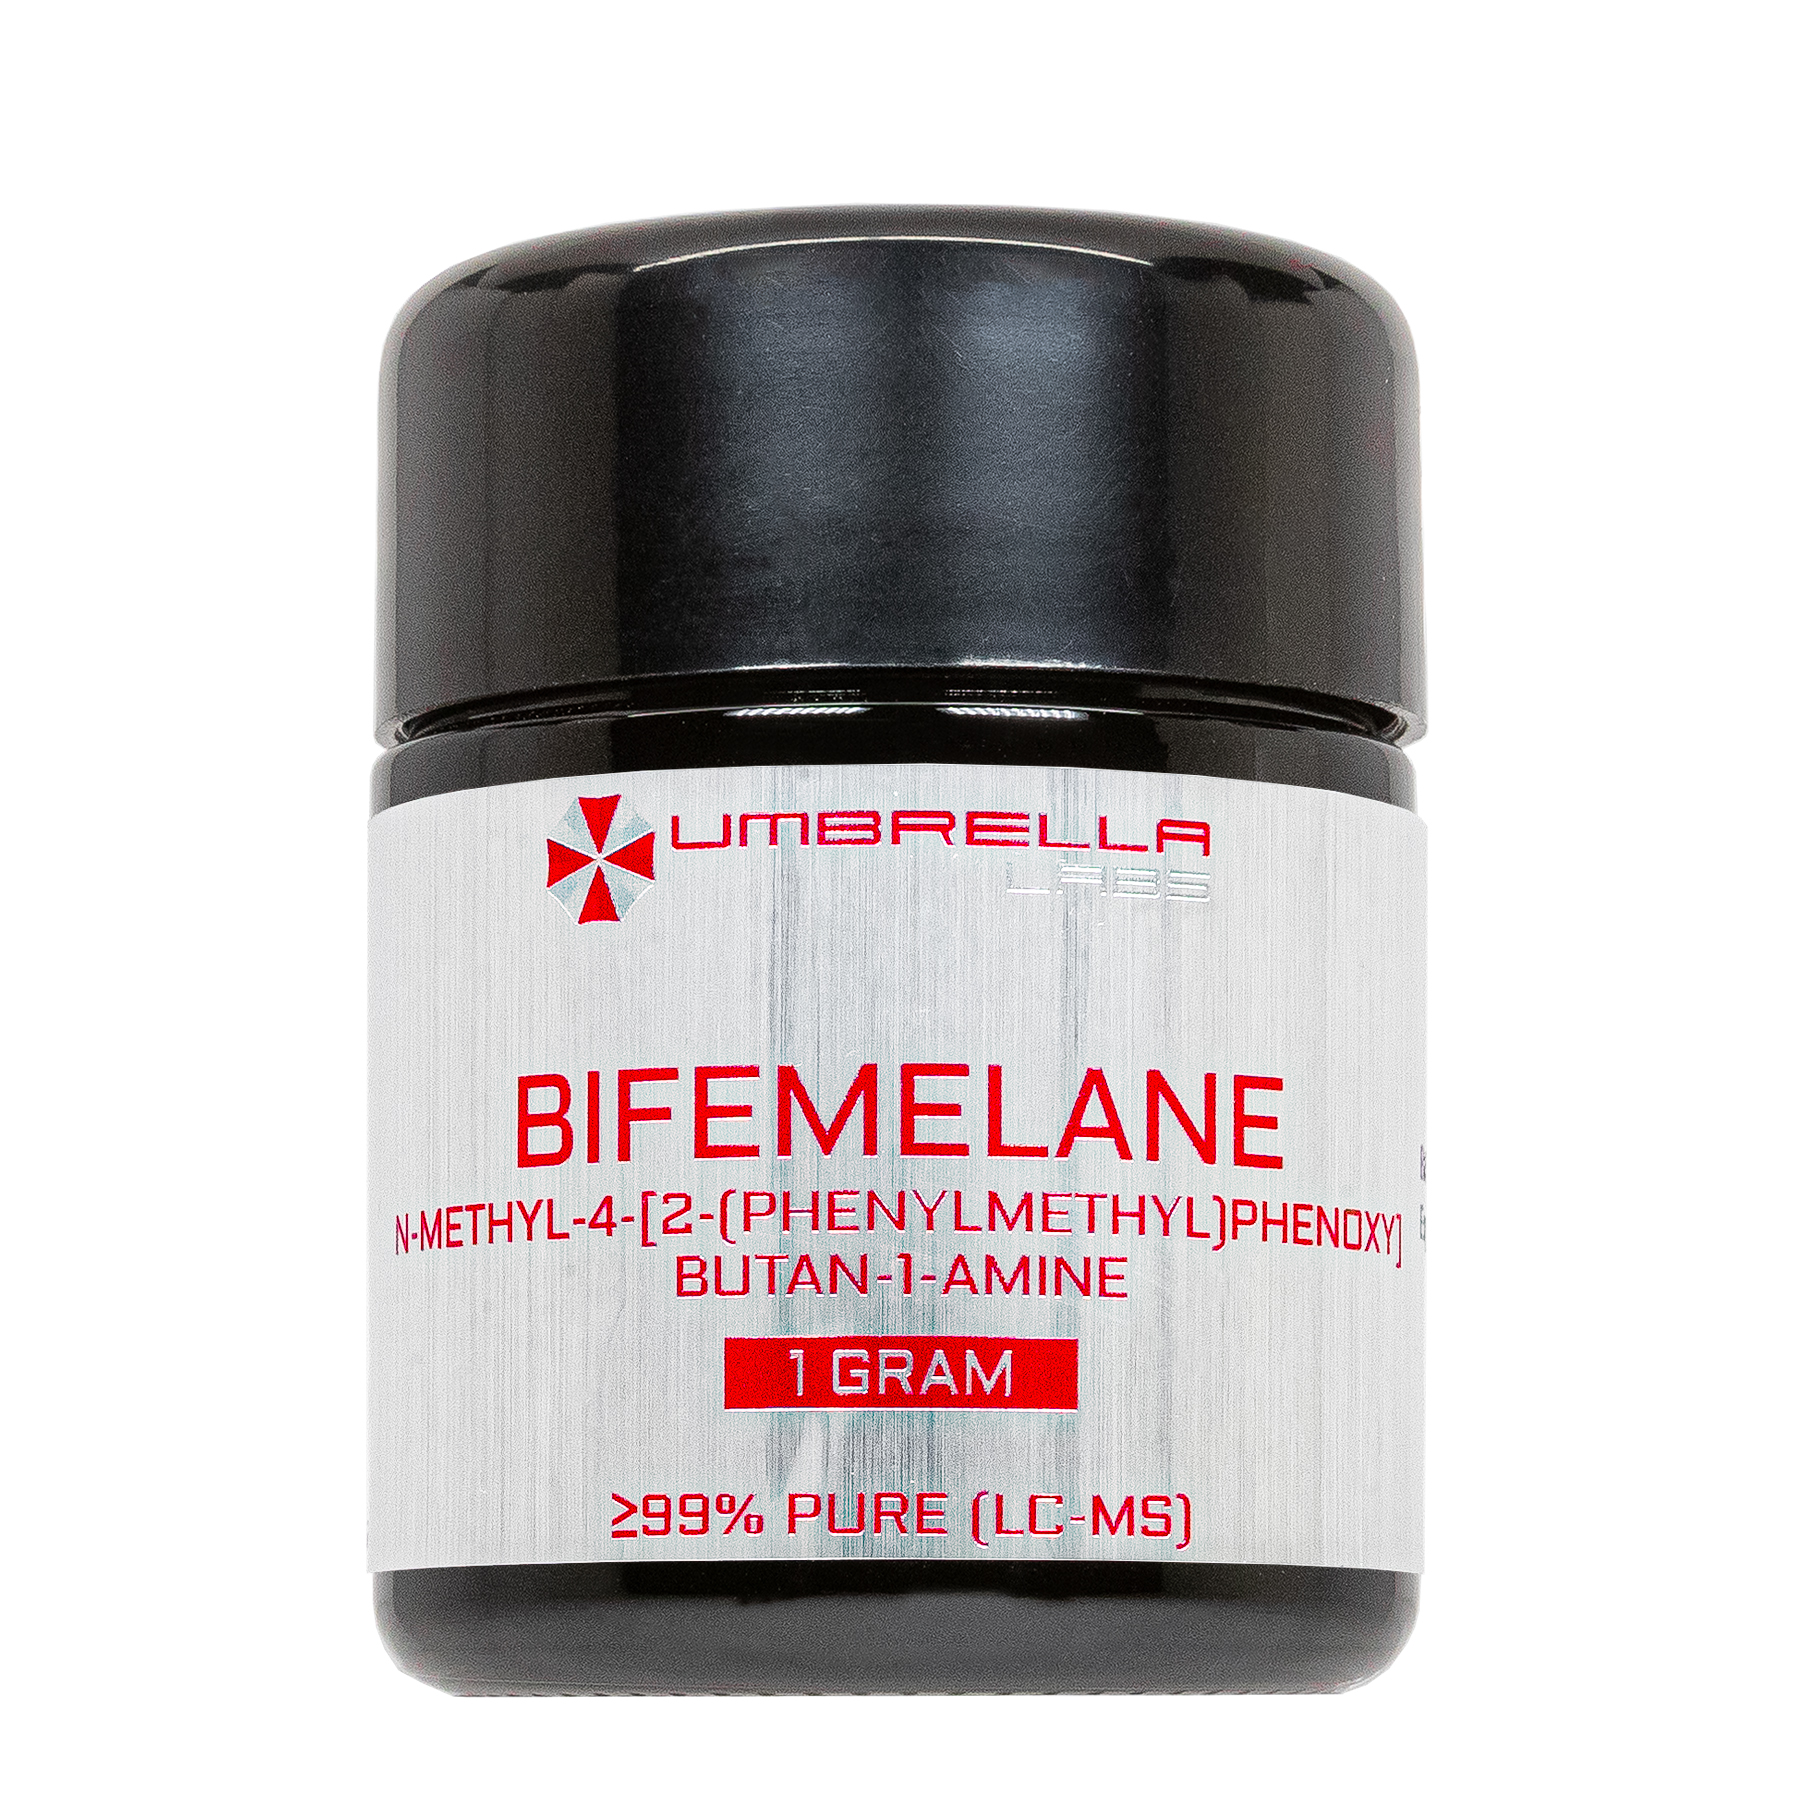 bifemelane powder (1 gram)